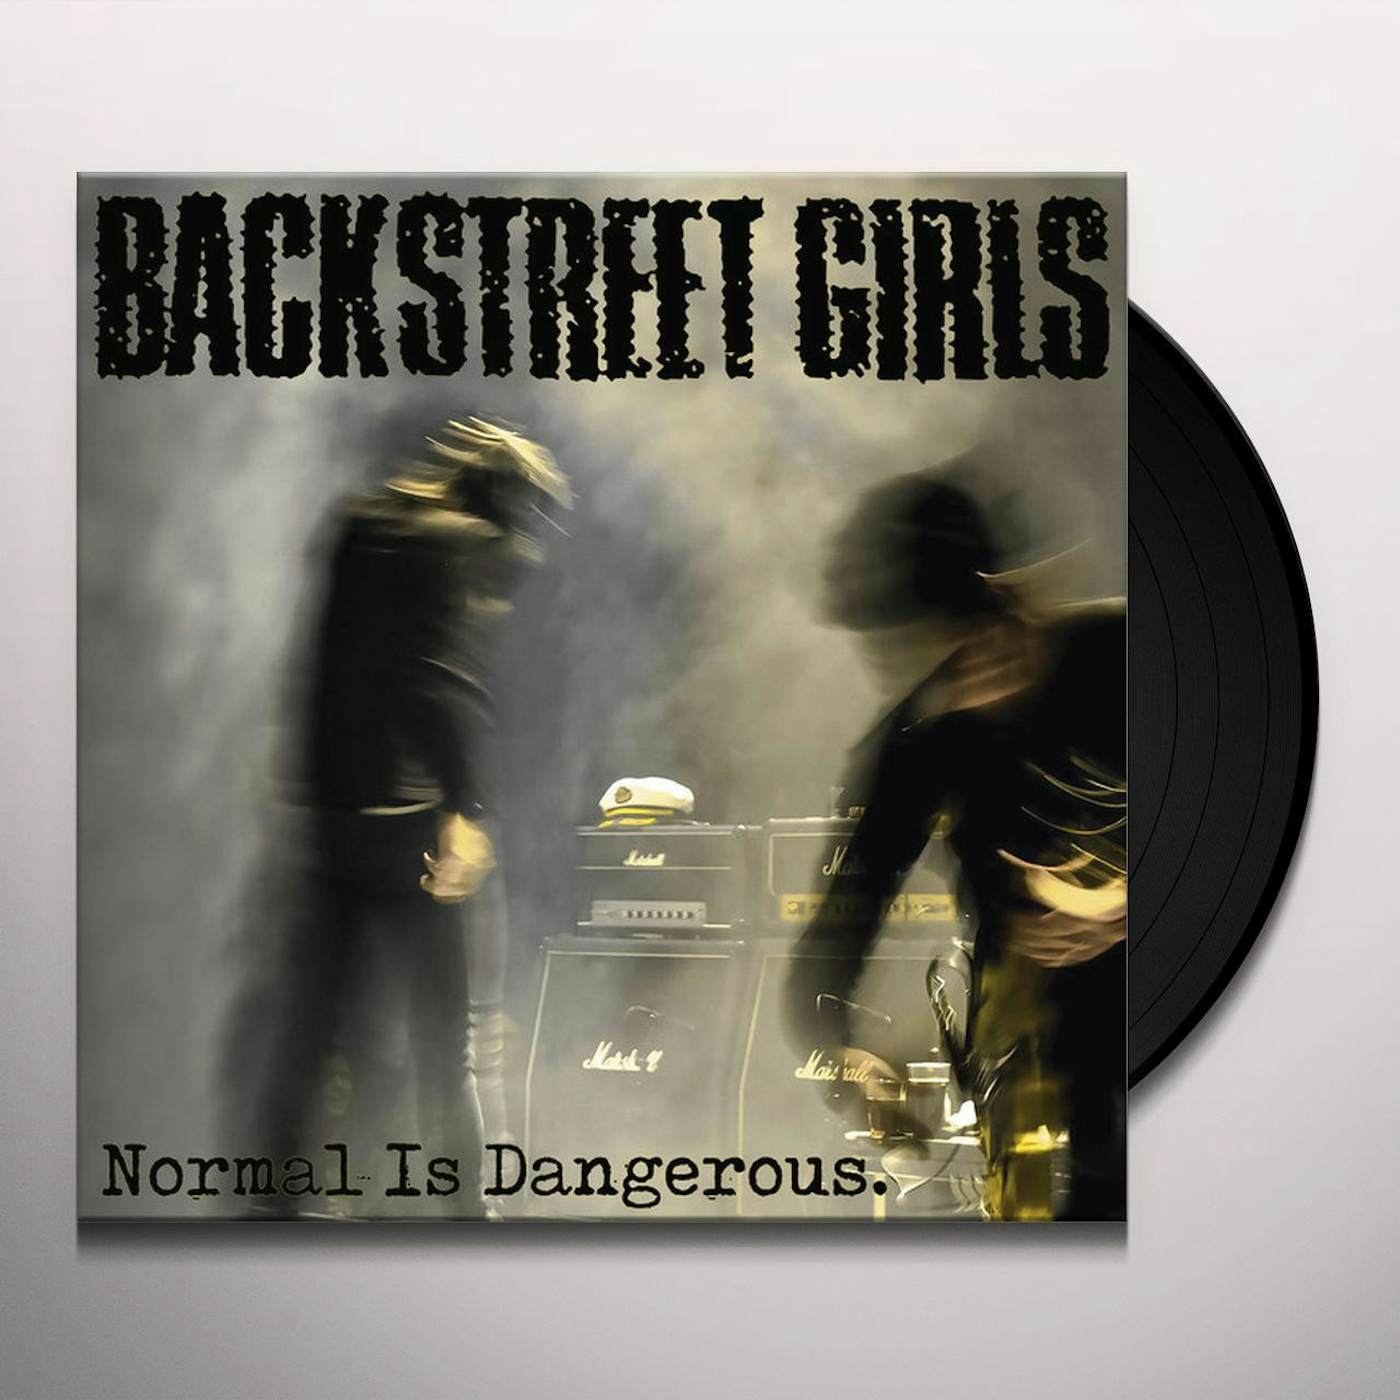 Backstreet Girls NORMAL IS DANGEROUS Vinyl Record